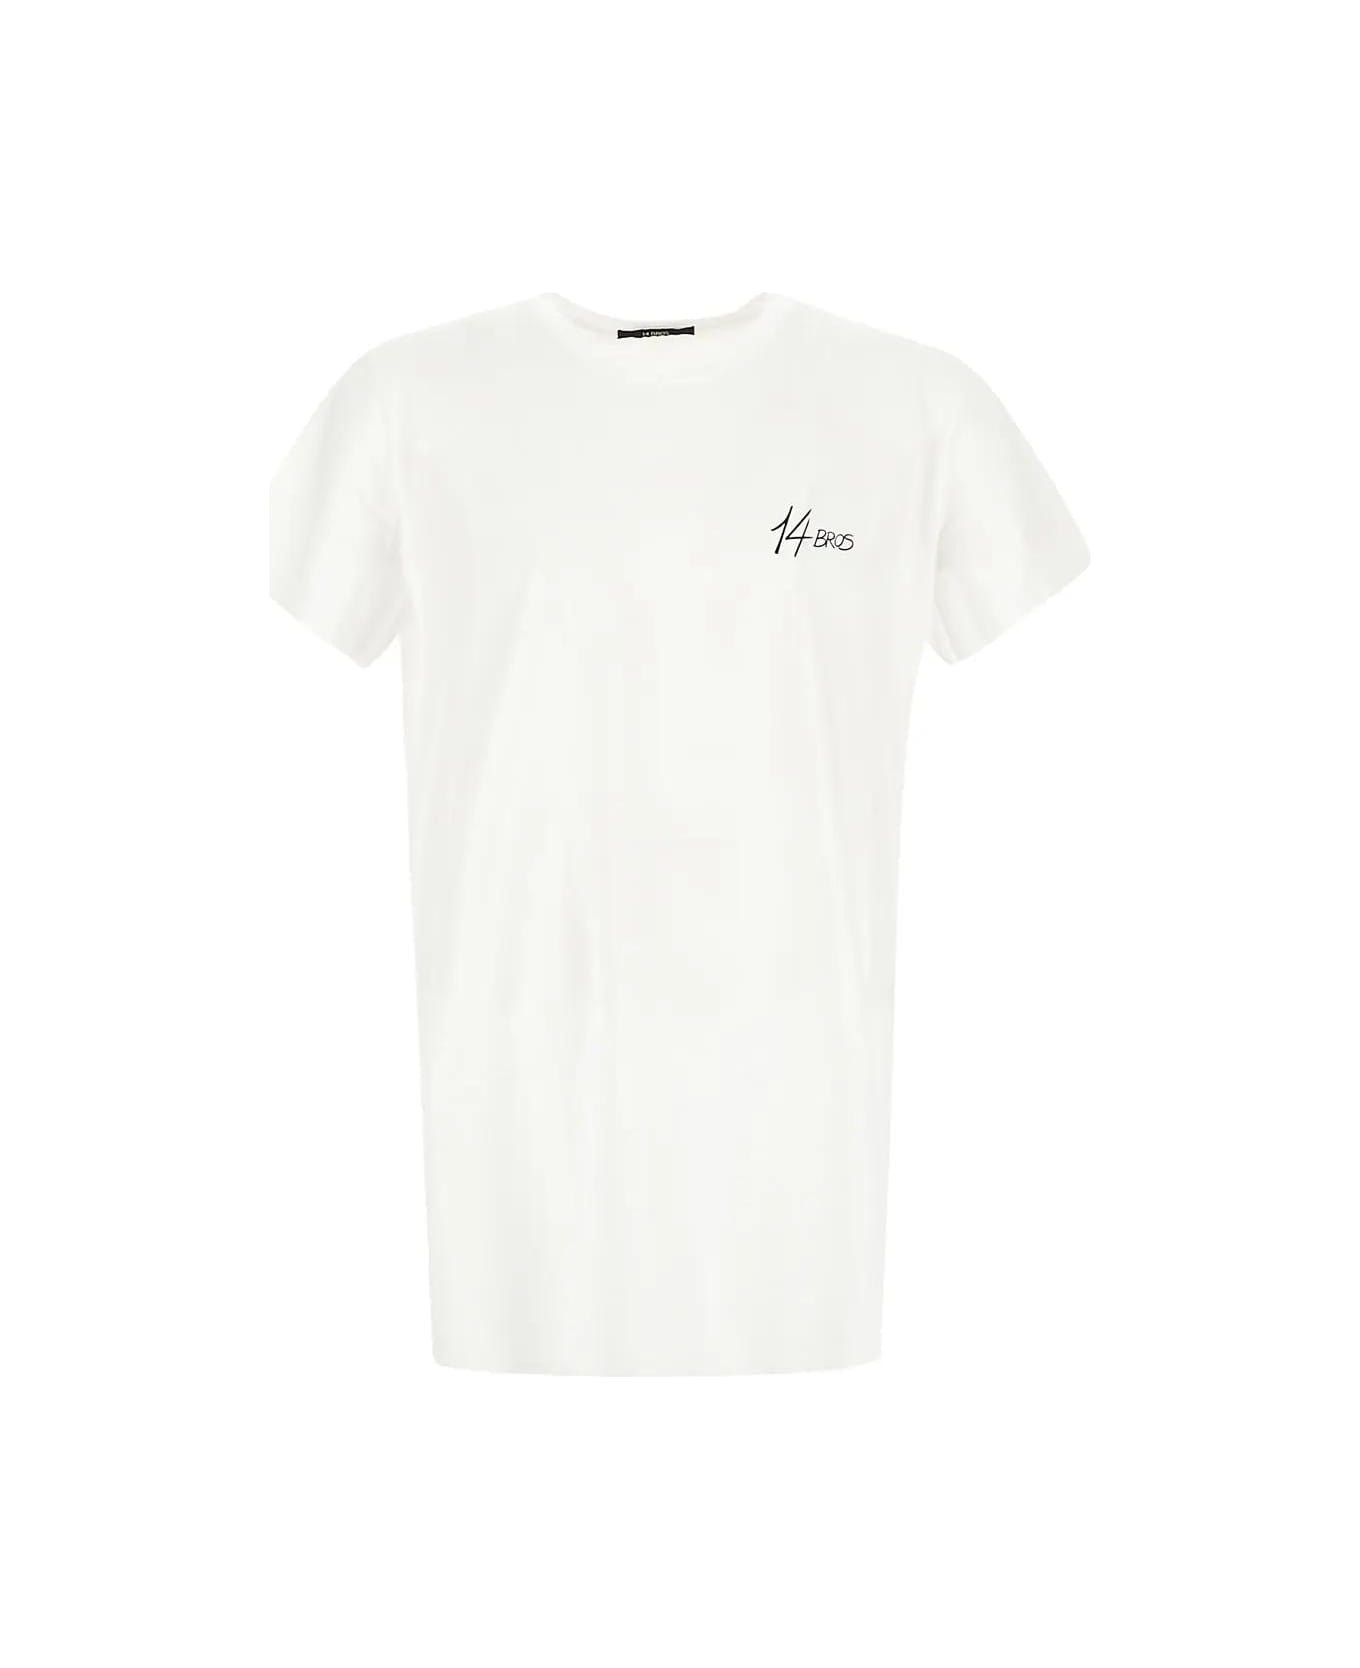 14 Bros Logo T-shirt - White シャツ